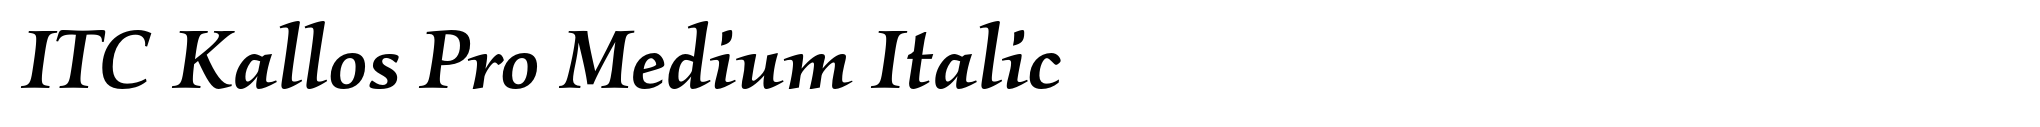 ITC Kallos Pro Medium Italic image